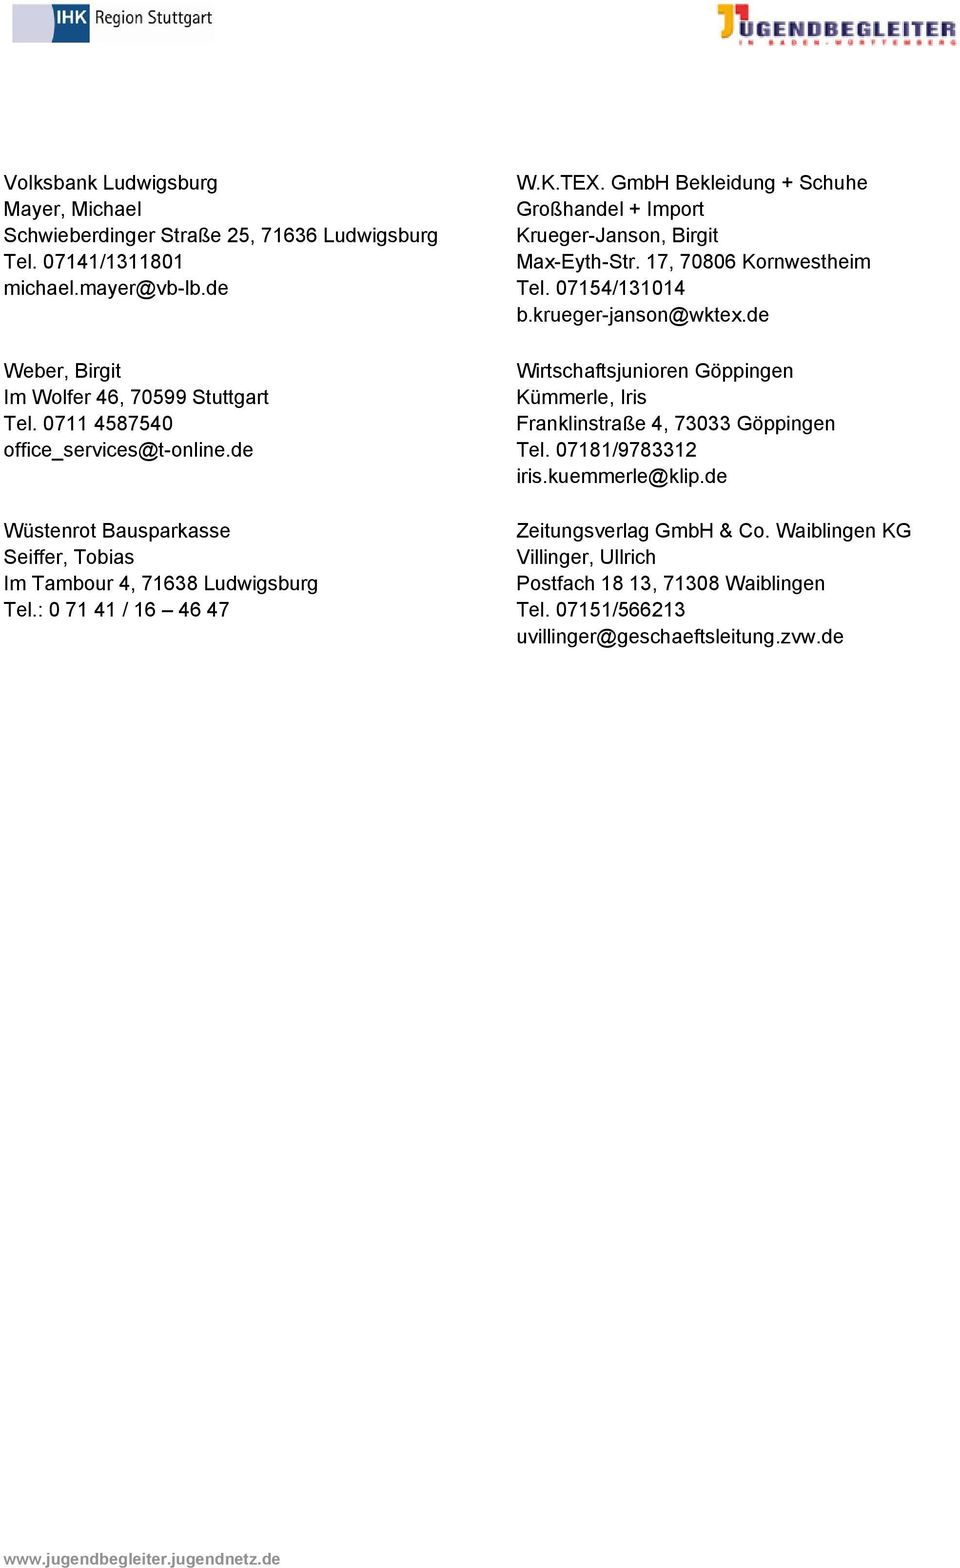 GmbH Bekleidung + Schuhe Großhandel + Import Krueger-Janson, Birgit Max-Eyth-Str. 17, 70806 Kornwestheim Tel. 07154/131014 b.krueger-janson@wktex.